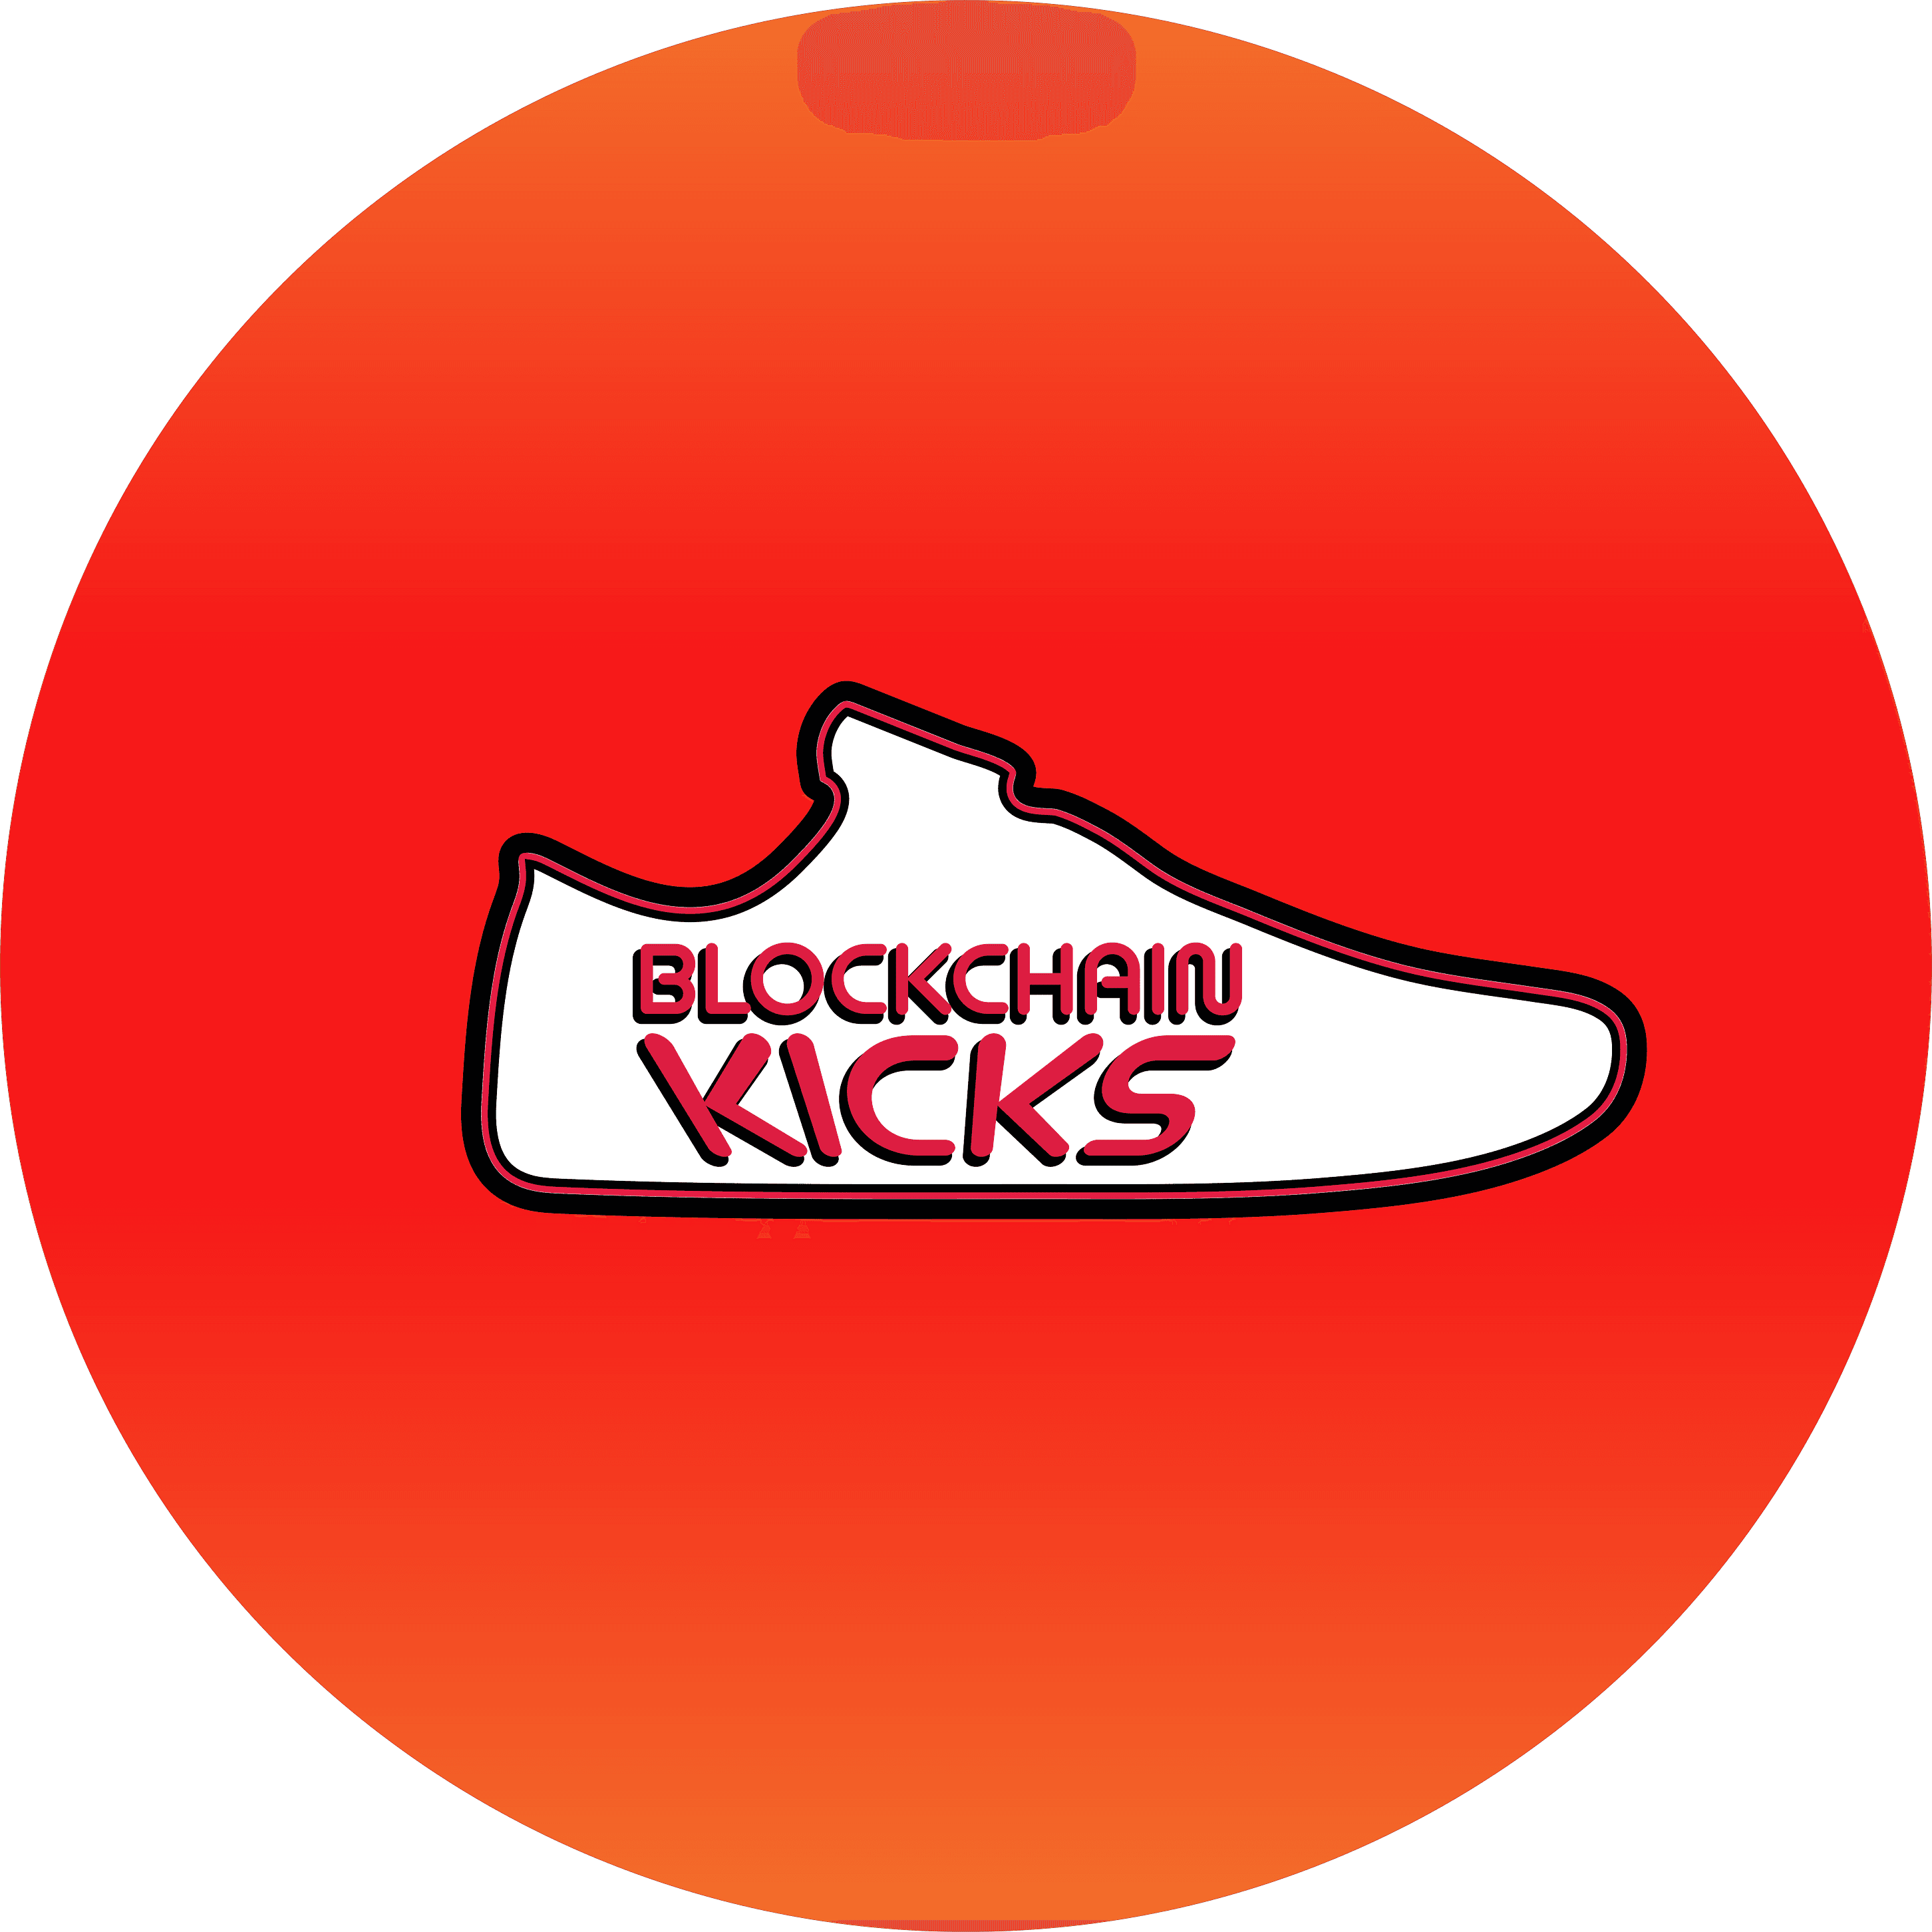 Blockchain Kicks